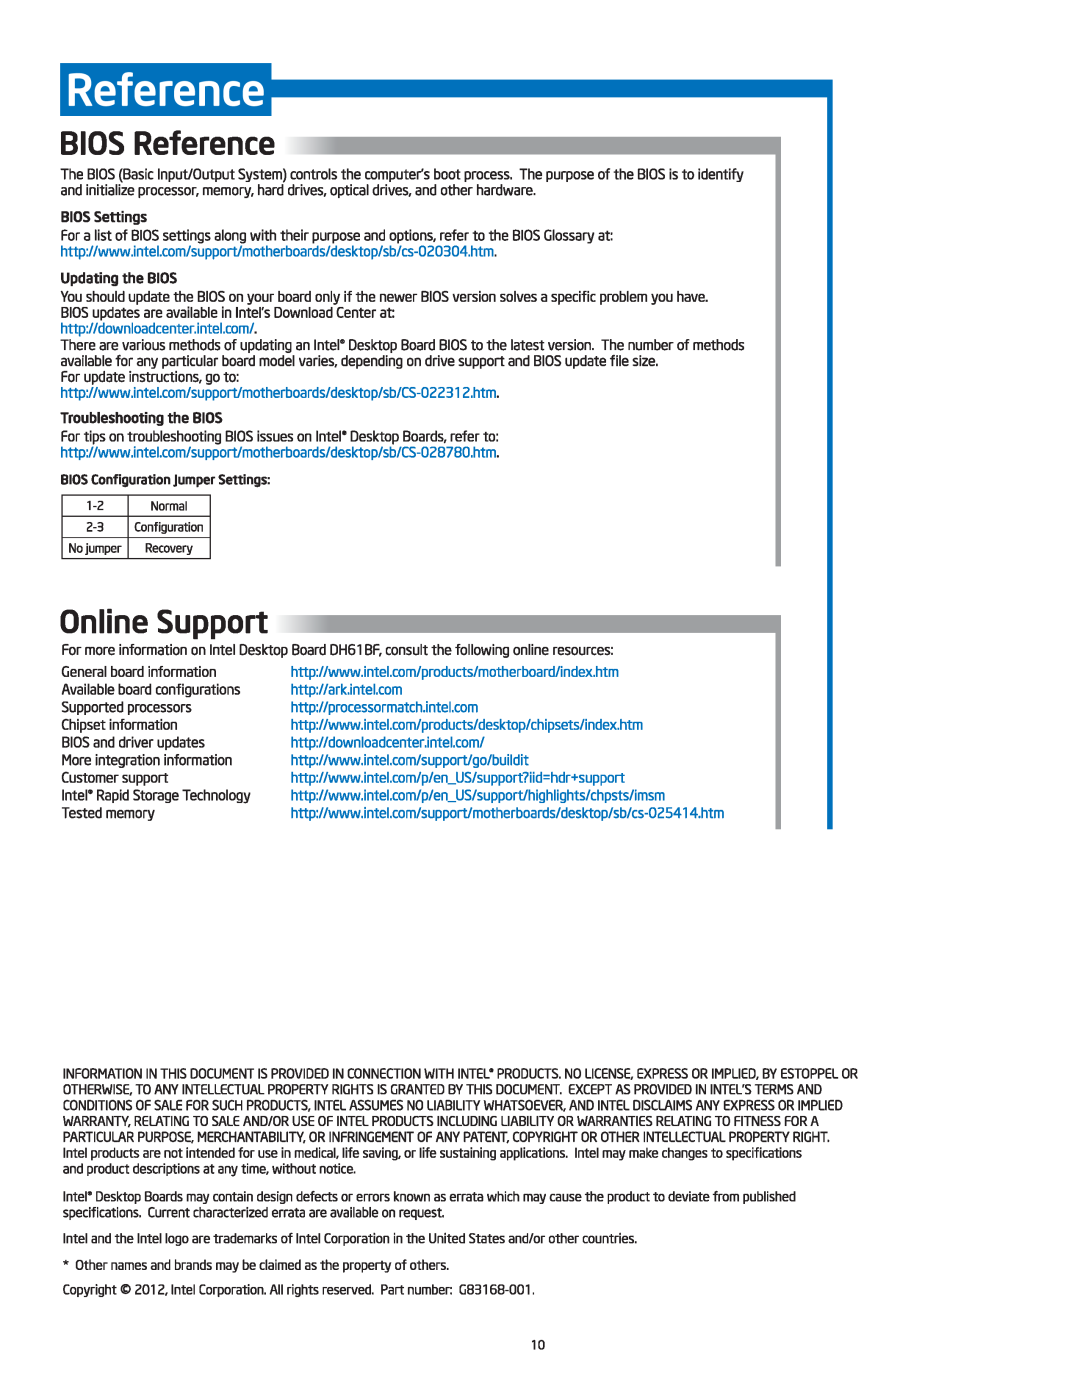 Intel BOXDH61BF manual 